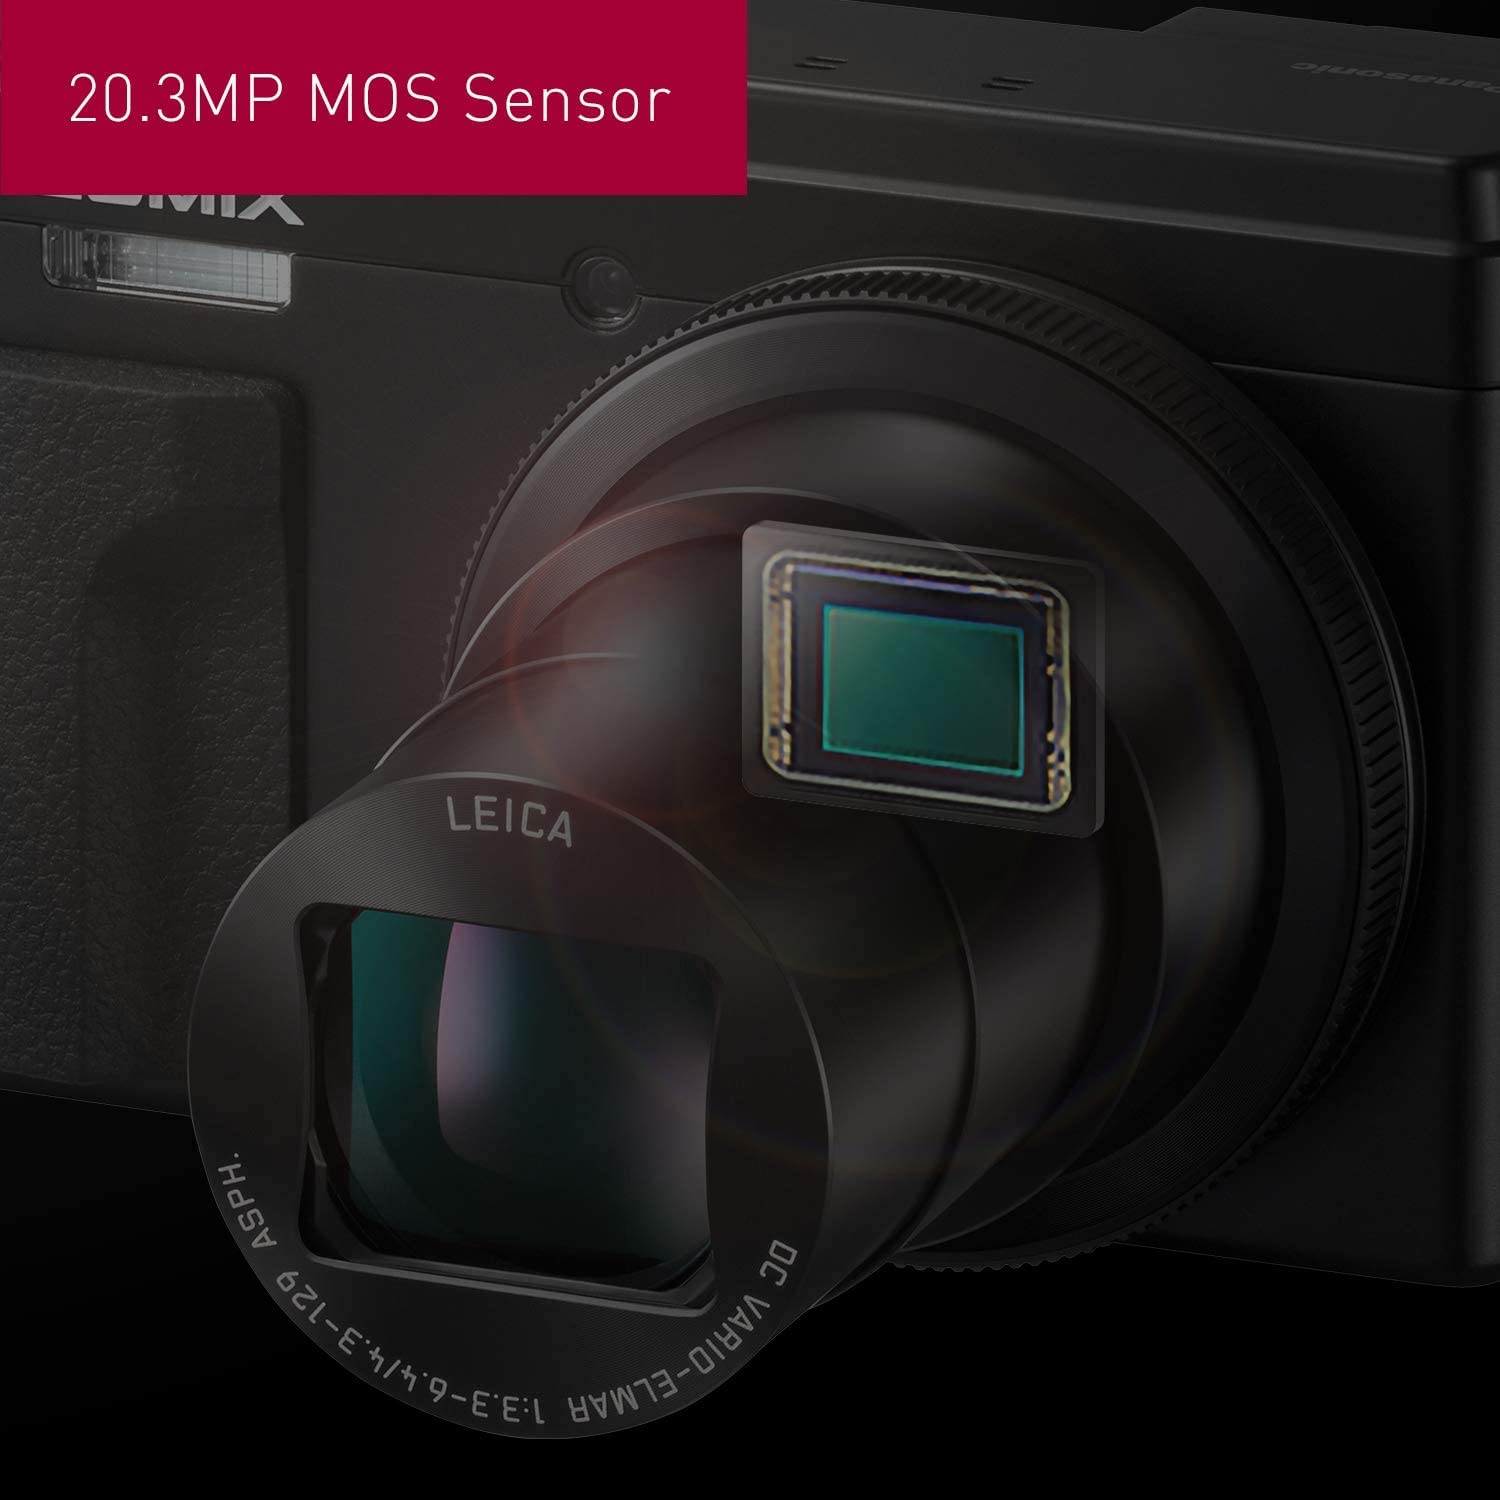 Panasonic LUMIX ZS80D 4K Digital Camera, 20.3MP 1/2.3-inch Sensor, 30X Leica DC Vario-Elmar Lens, F3.3-6.4 Aperture, WiFi, Hybrid O.I.S. Stabilization, 3-Inch LCD, DC-ZS80DS (Silver)